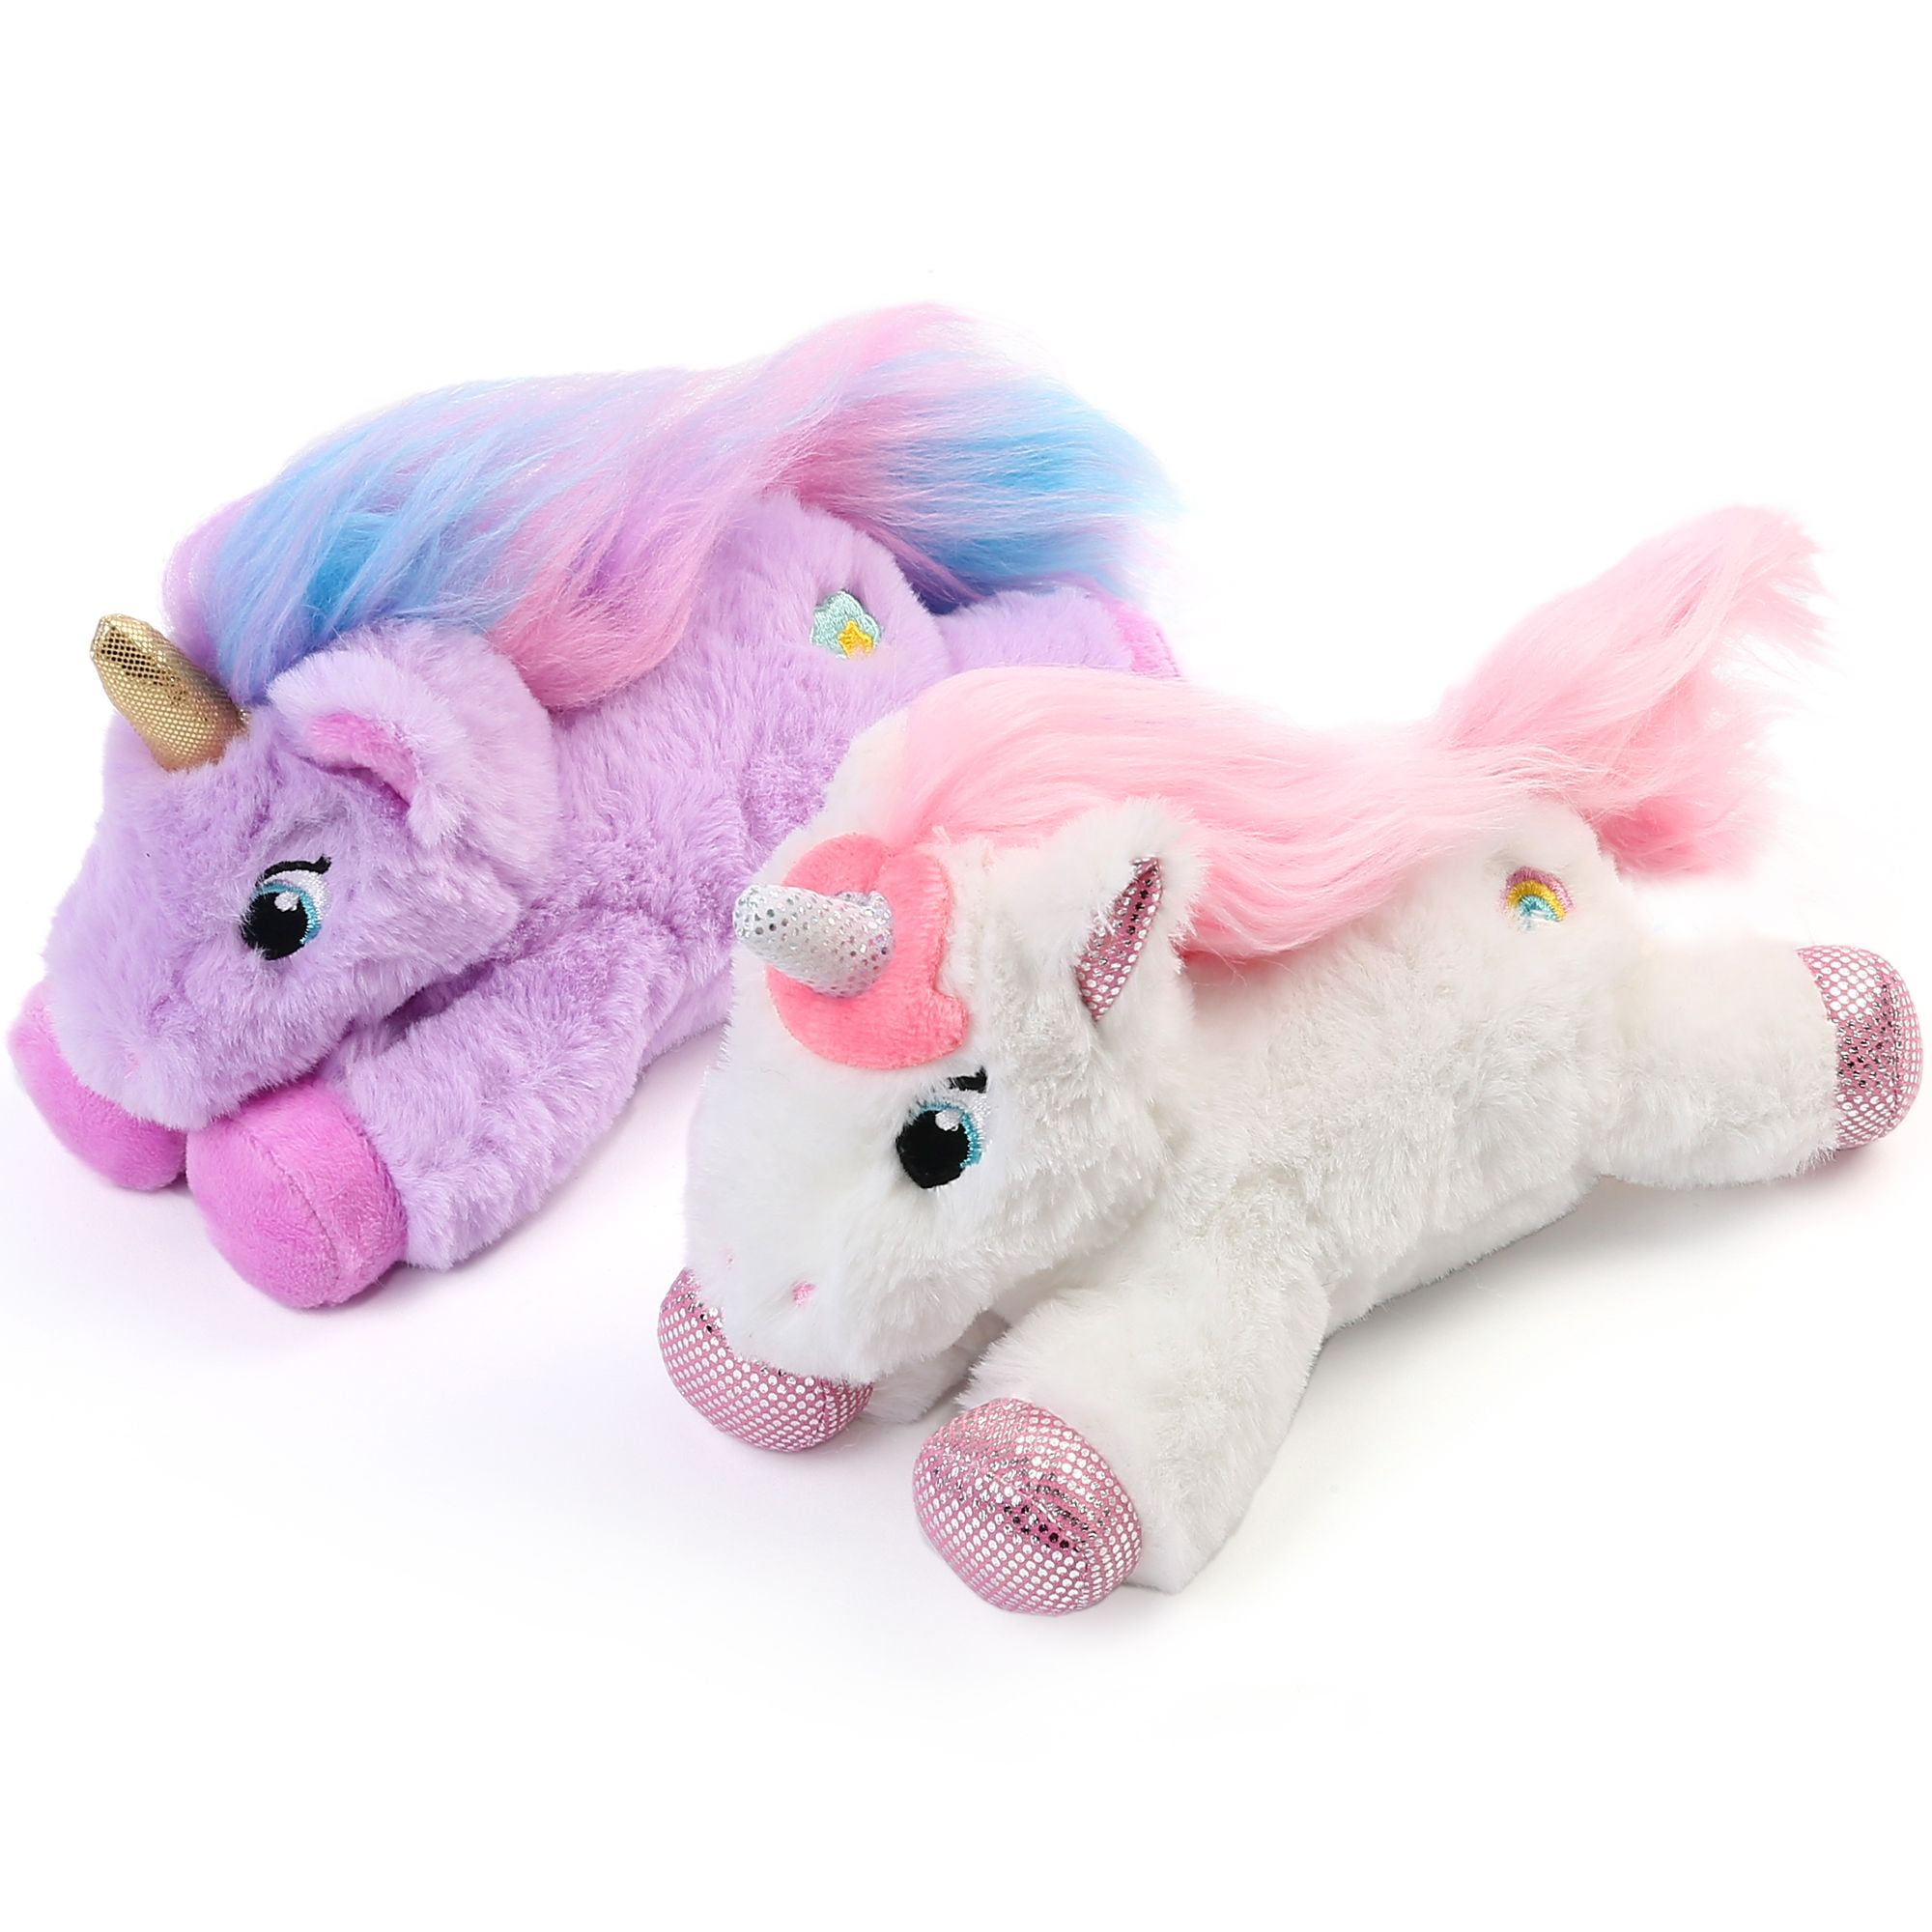 LotFancy 2 Pcs 7 in Unicorn Stuffed Animal Plush Toys Gift for Kids Girls Boys, Purple and White - image 1 of 6